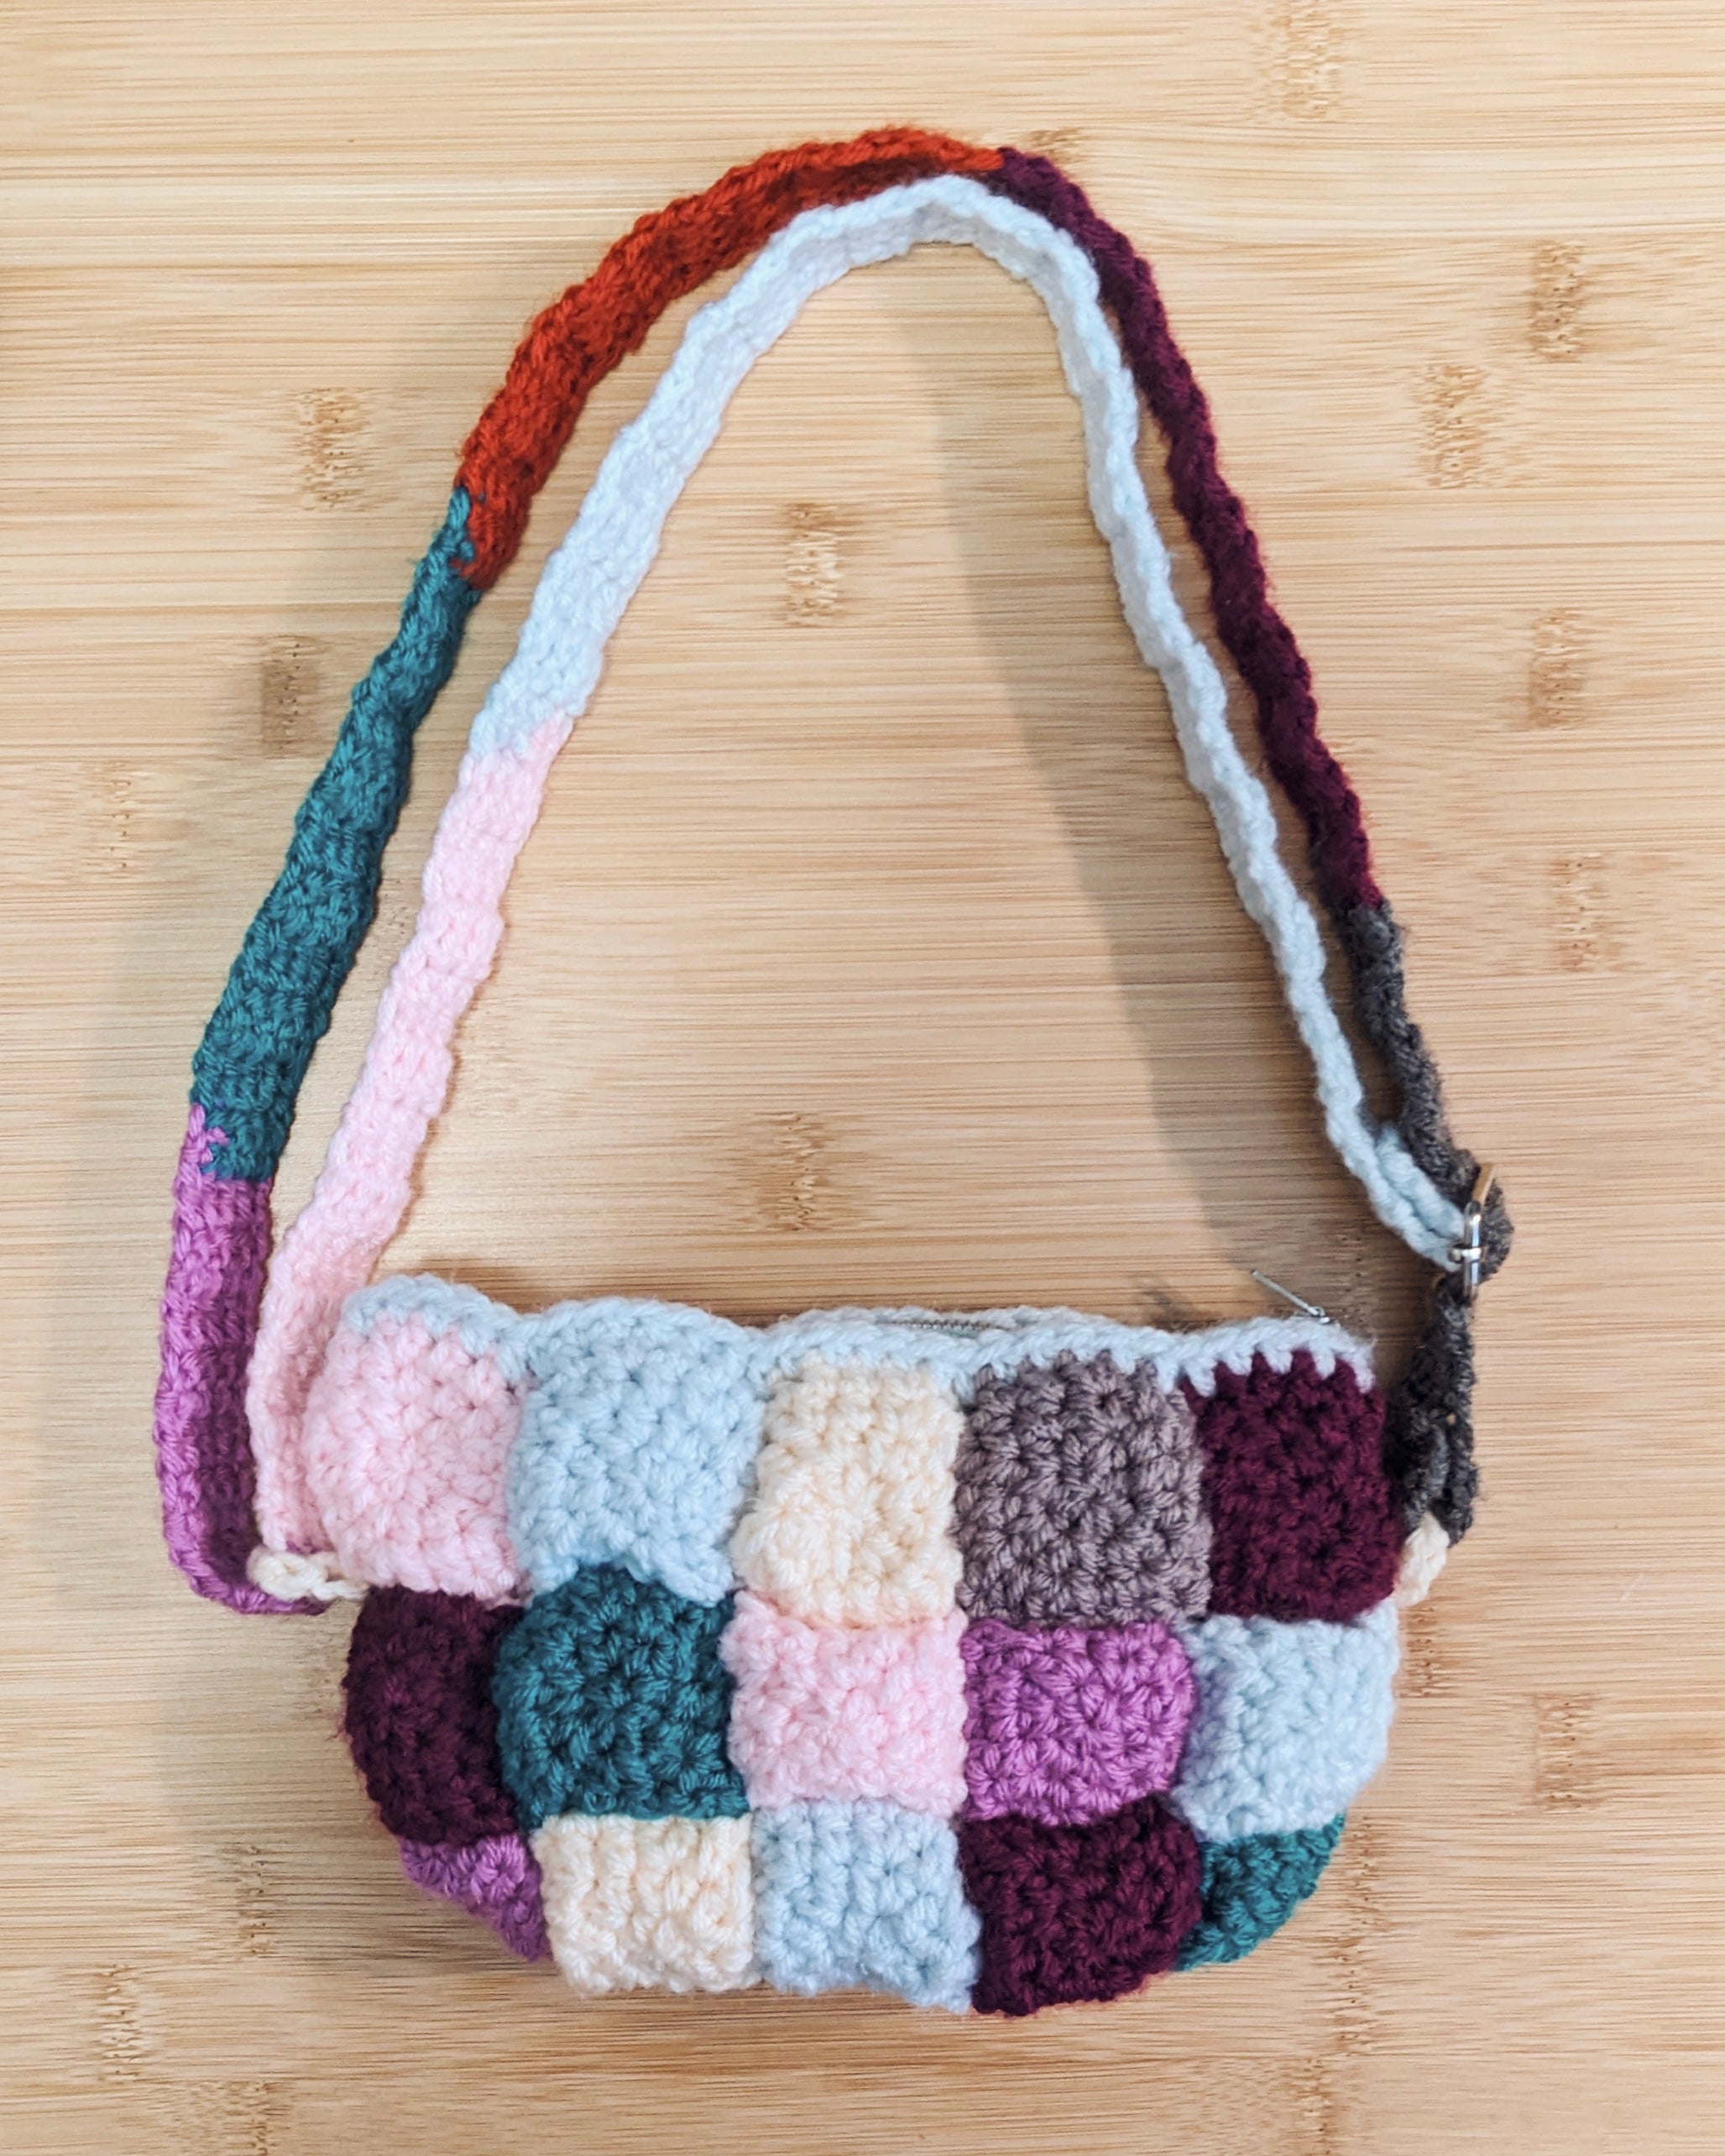 How to Crochet a Basic Cord | Crochet Bag Strap | ViVi Berry Crochet -  YouTube